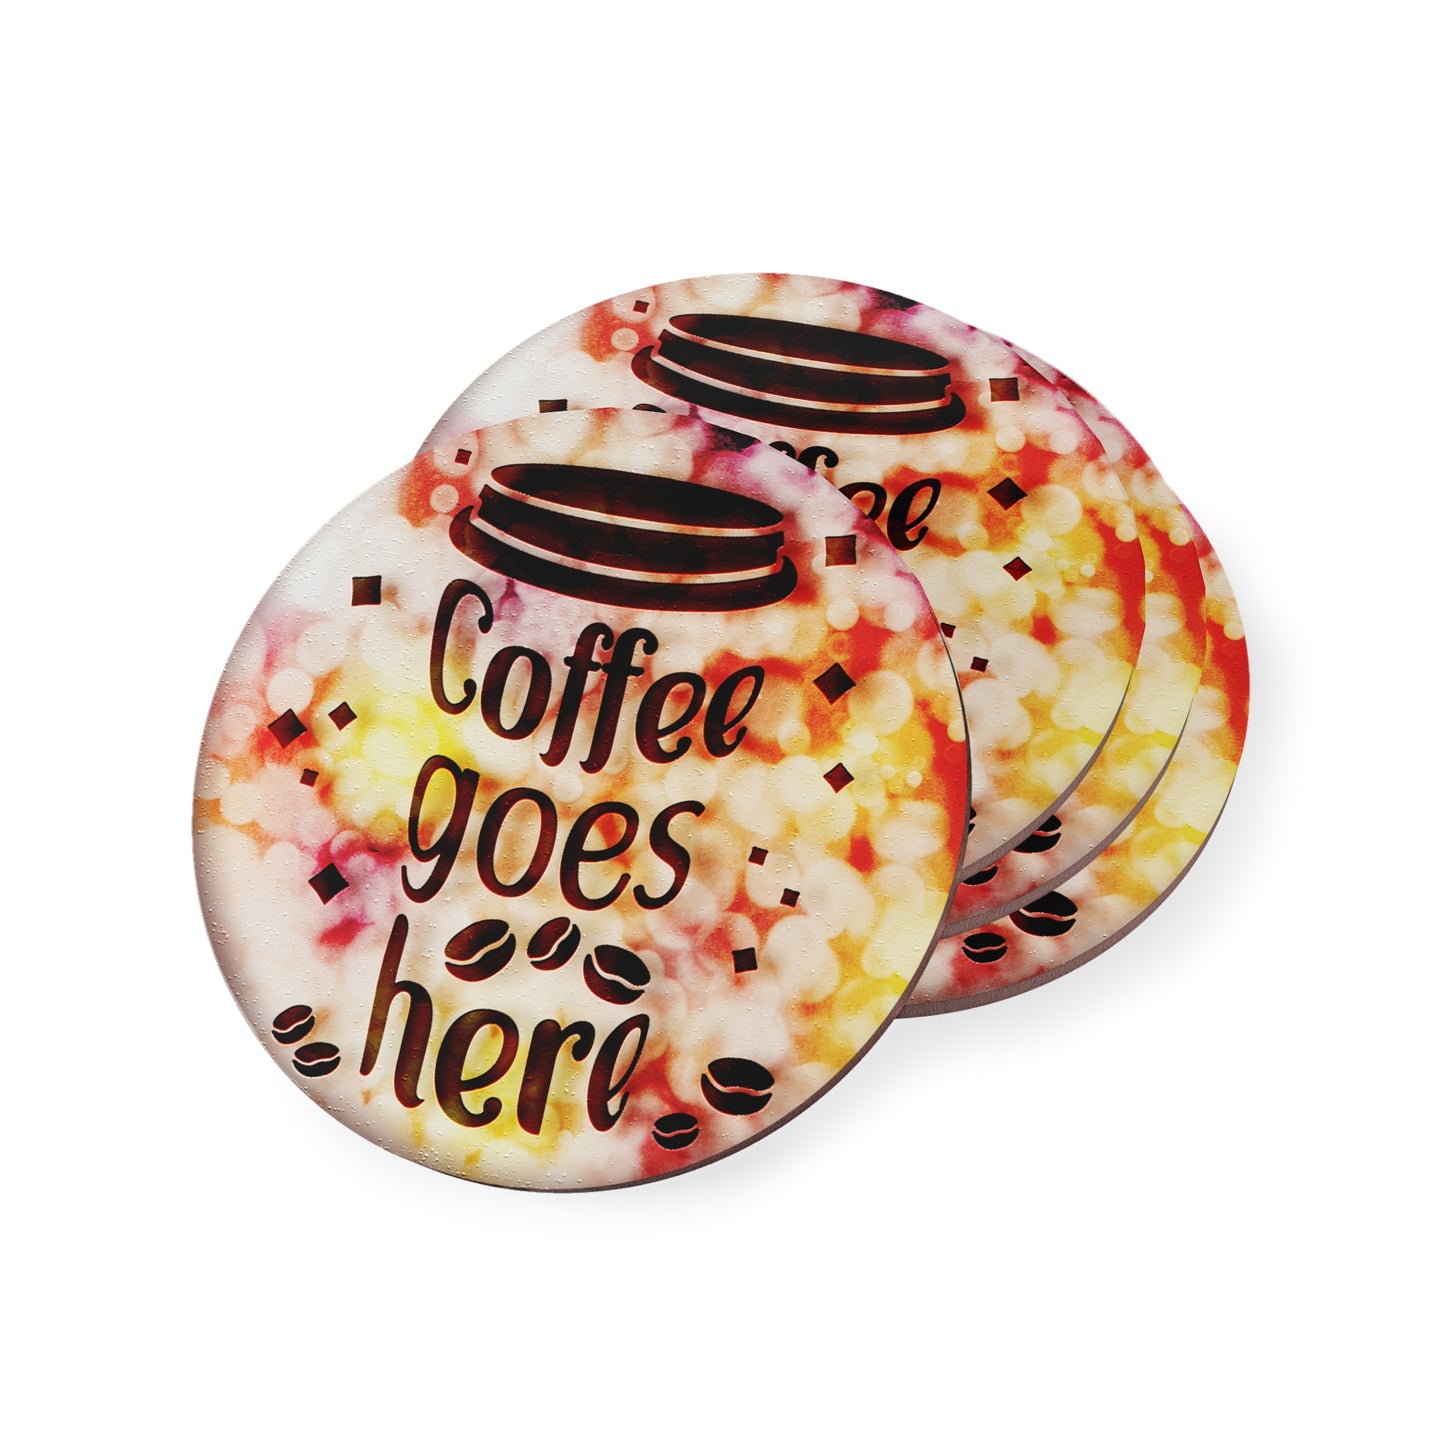 " Coffee Goes Here " Round Coasters